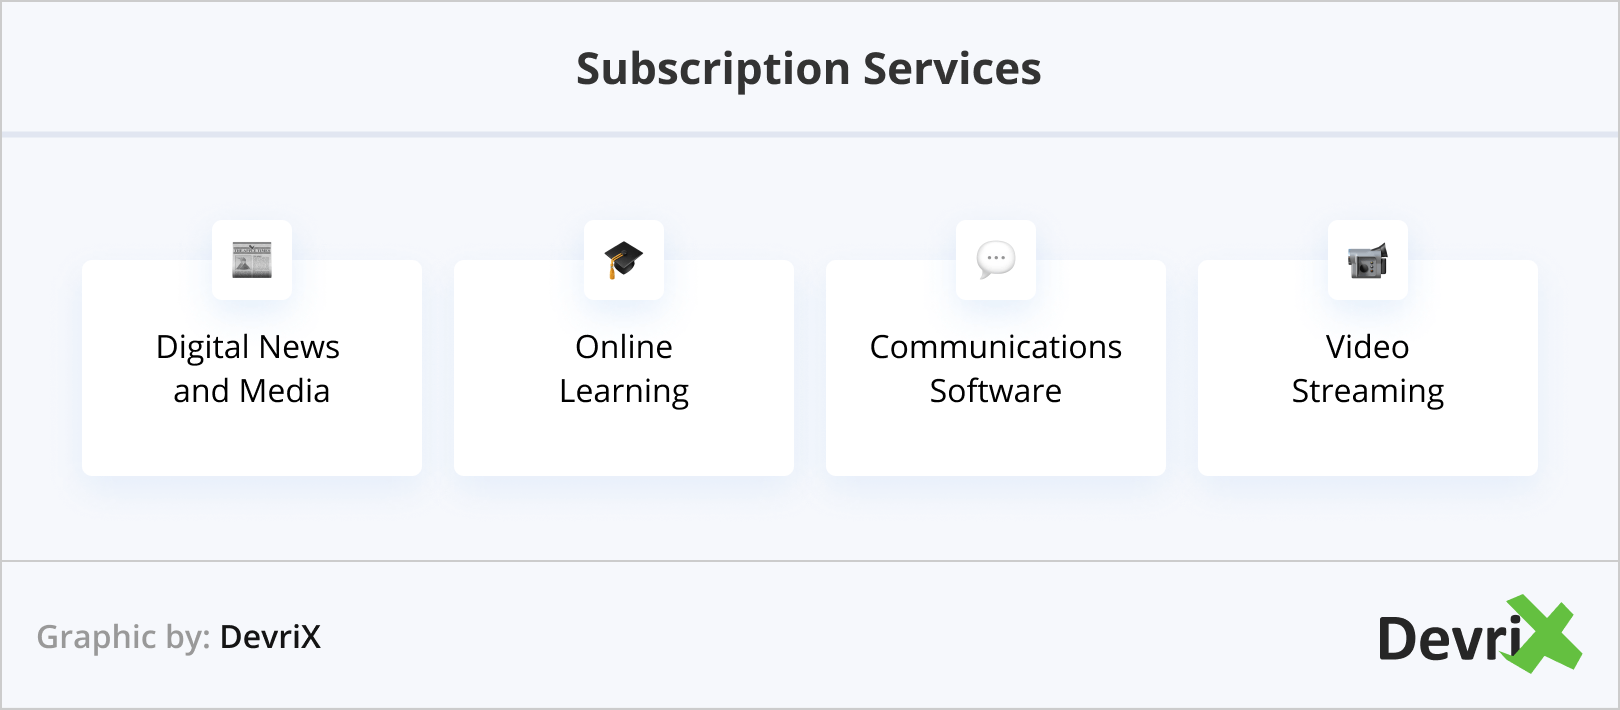 Subscription Services